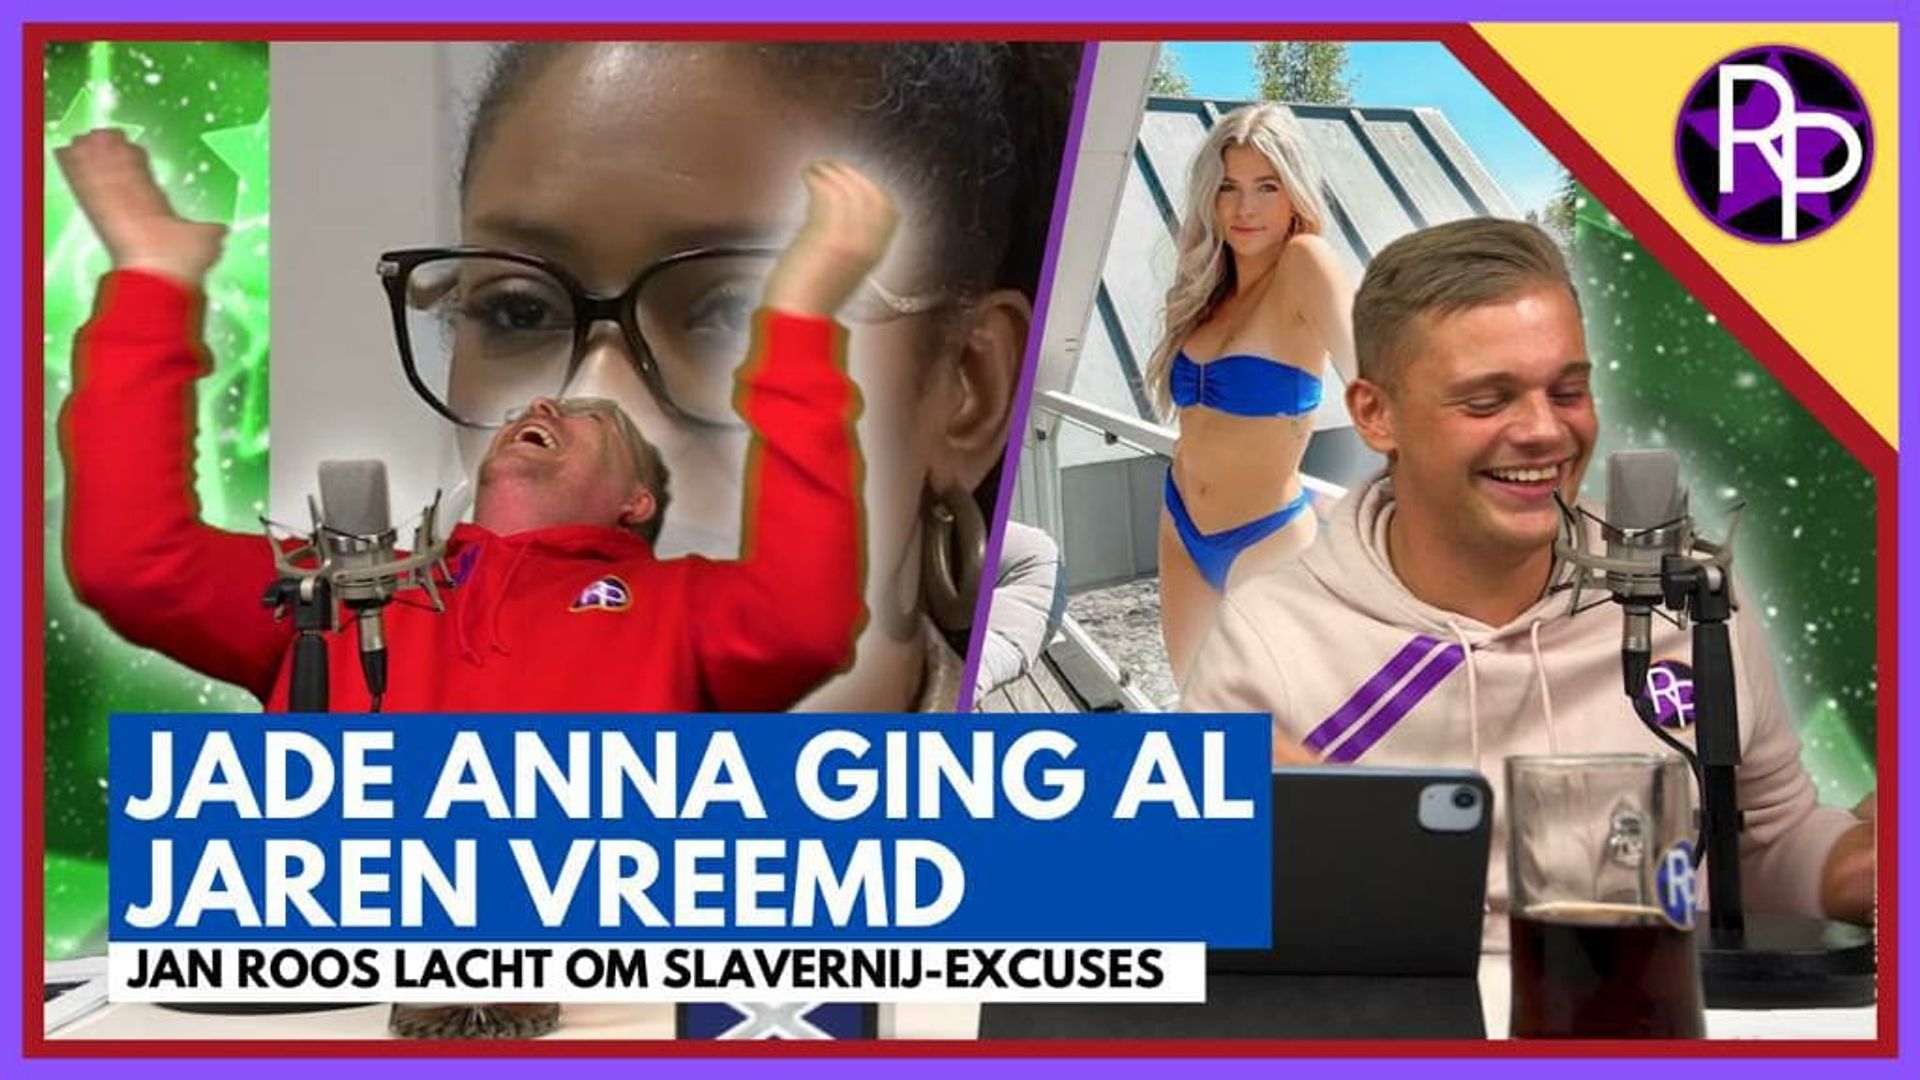 Jade Anna ging al jaren vreemd & Jan Roos lacht om slavernij-excuses | RoddelPraat